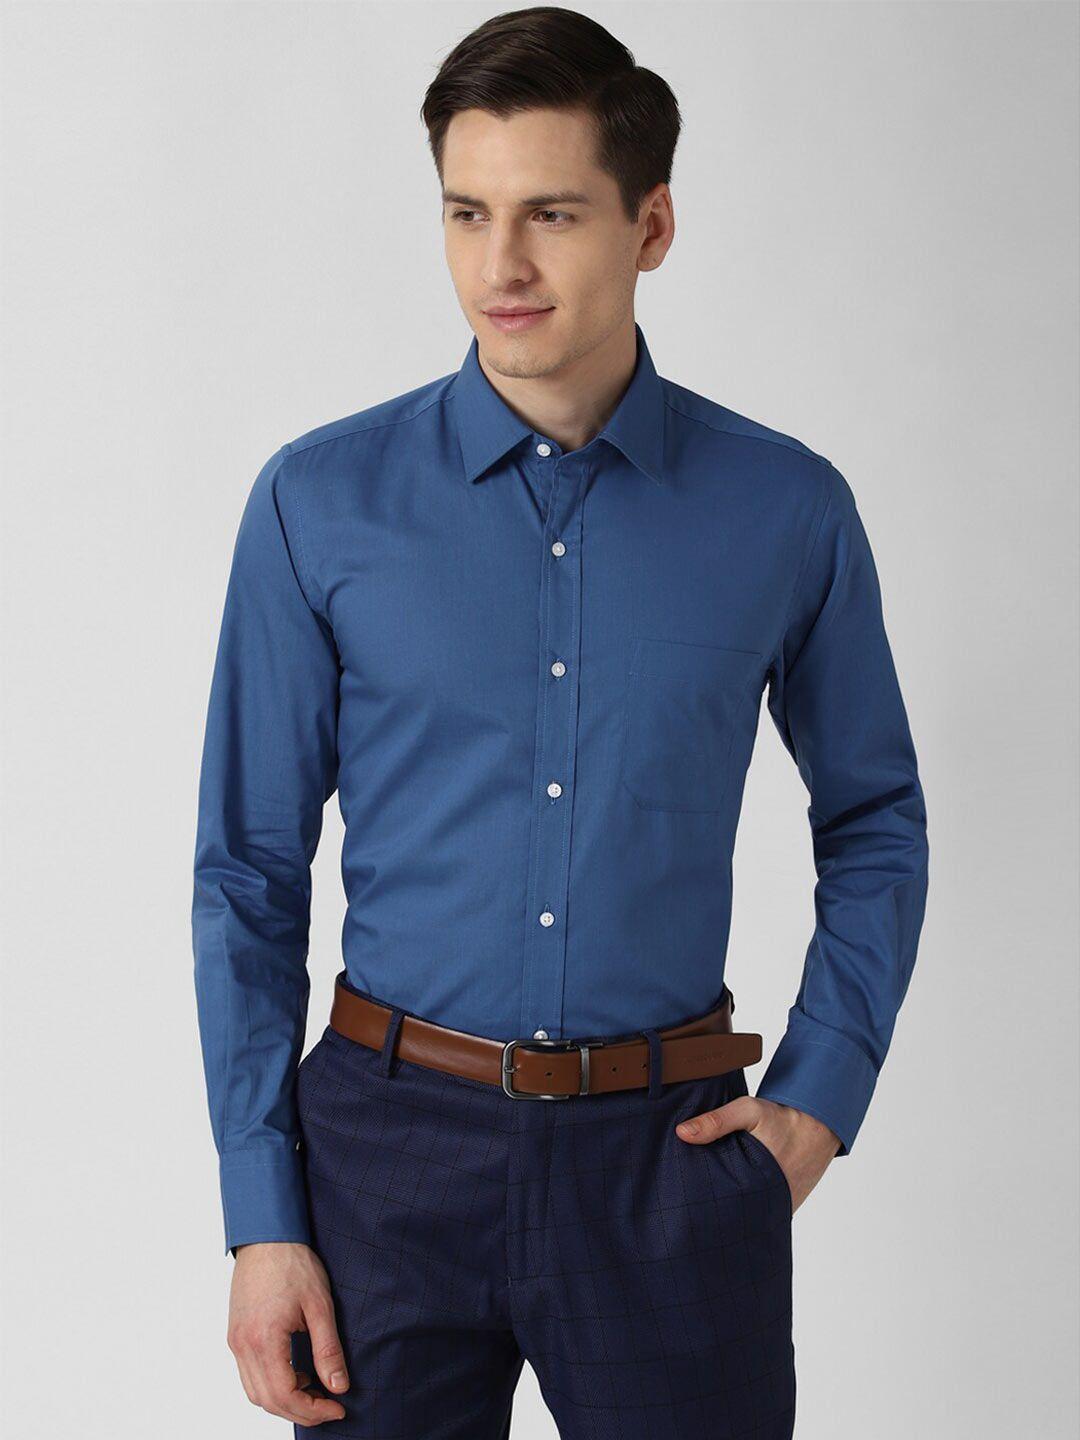 peter england men navy blue solid cotton slim fit formal shirt